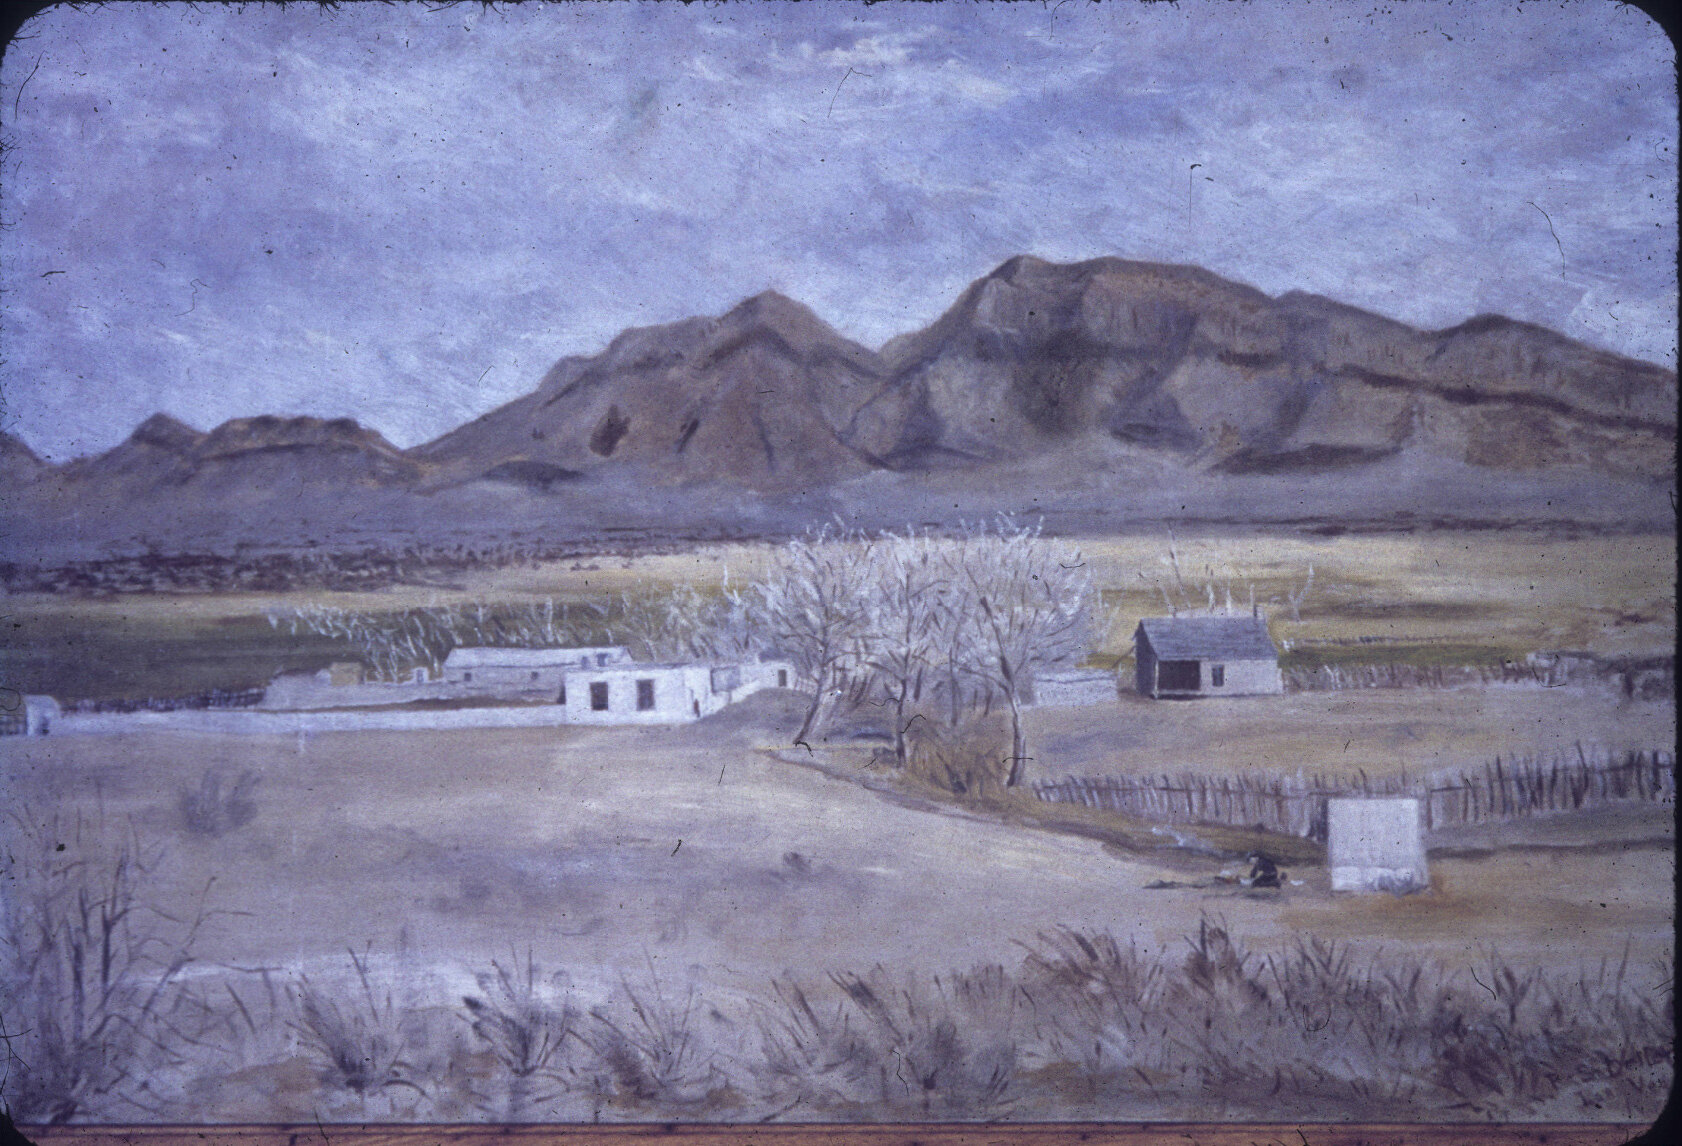 1876 Photograph of Dellenbaugh's painting of Las Vegas Fort, 1876 sm_2000px.jpg